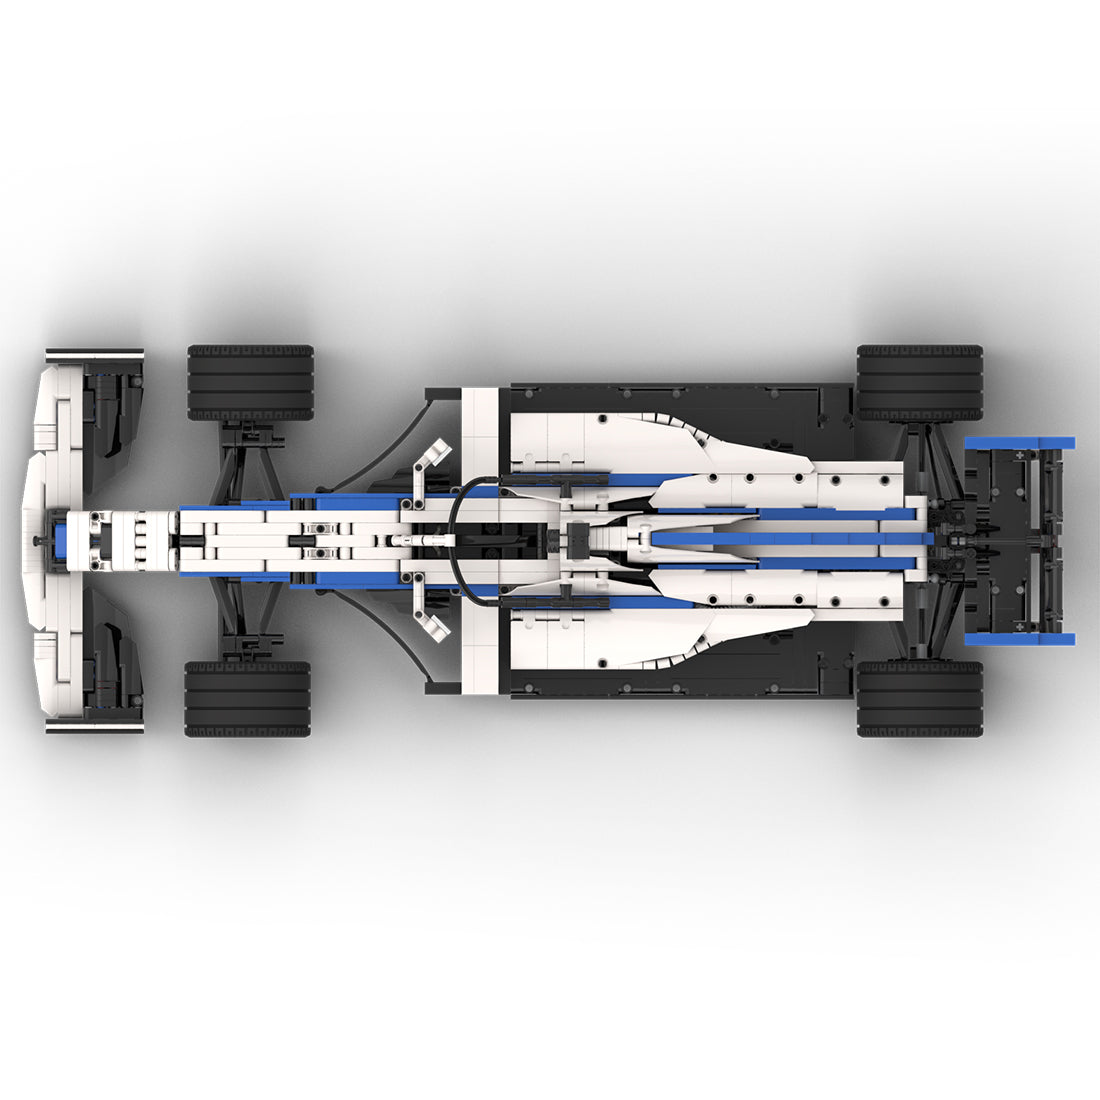 MOC-47392 FW43 1/8 Scale Formula Racing Car